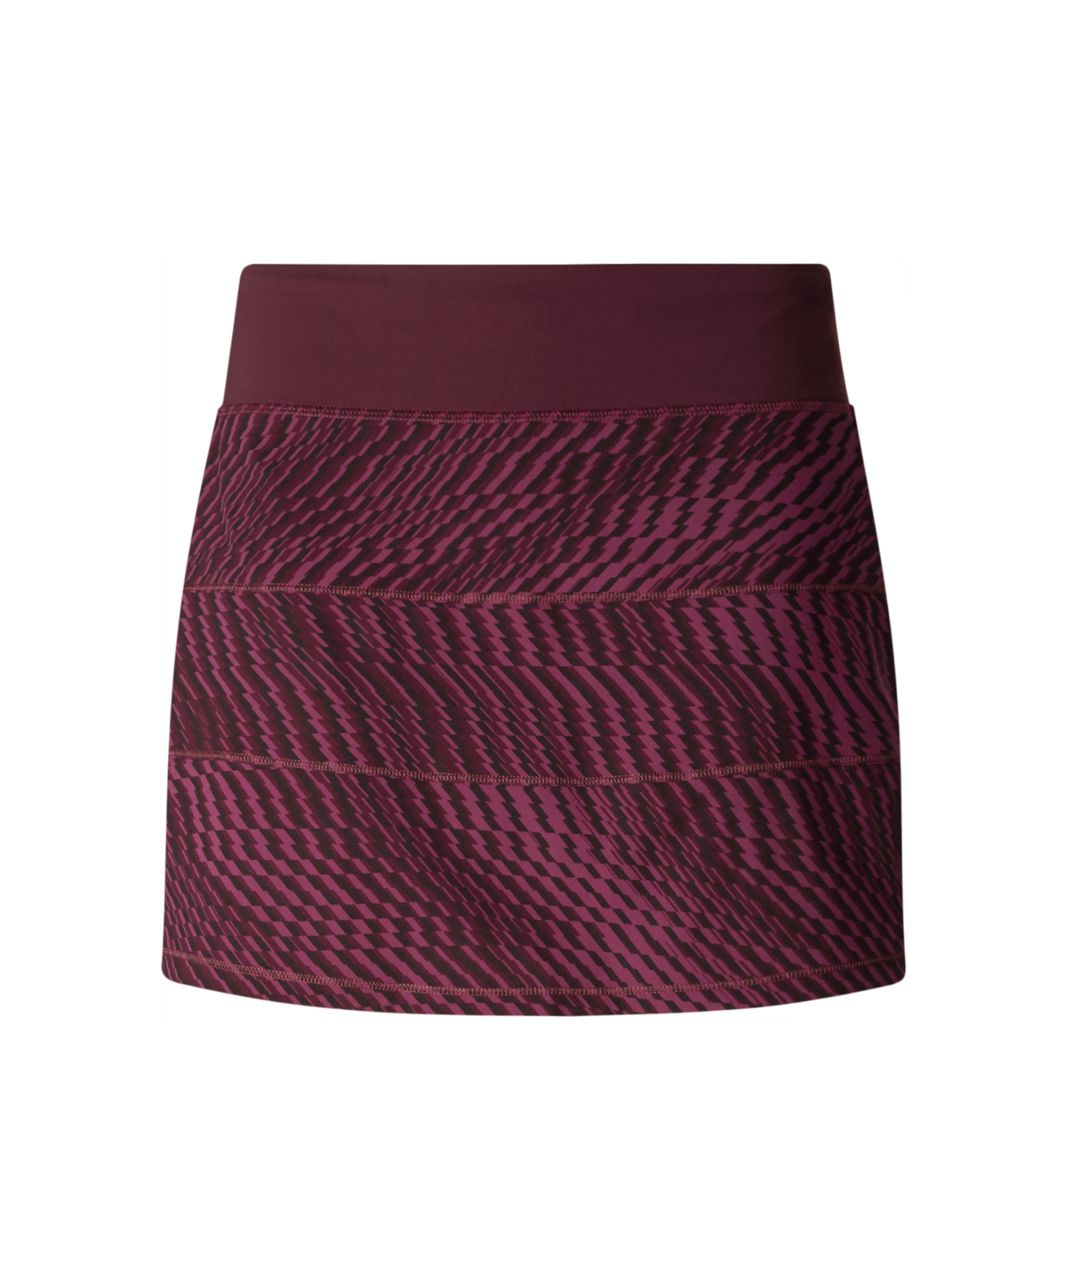 Lululemon Pace Rival Skirt II (Tall) - Shifted Horizon Red Grape Black / Bordeaux Drama